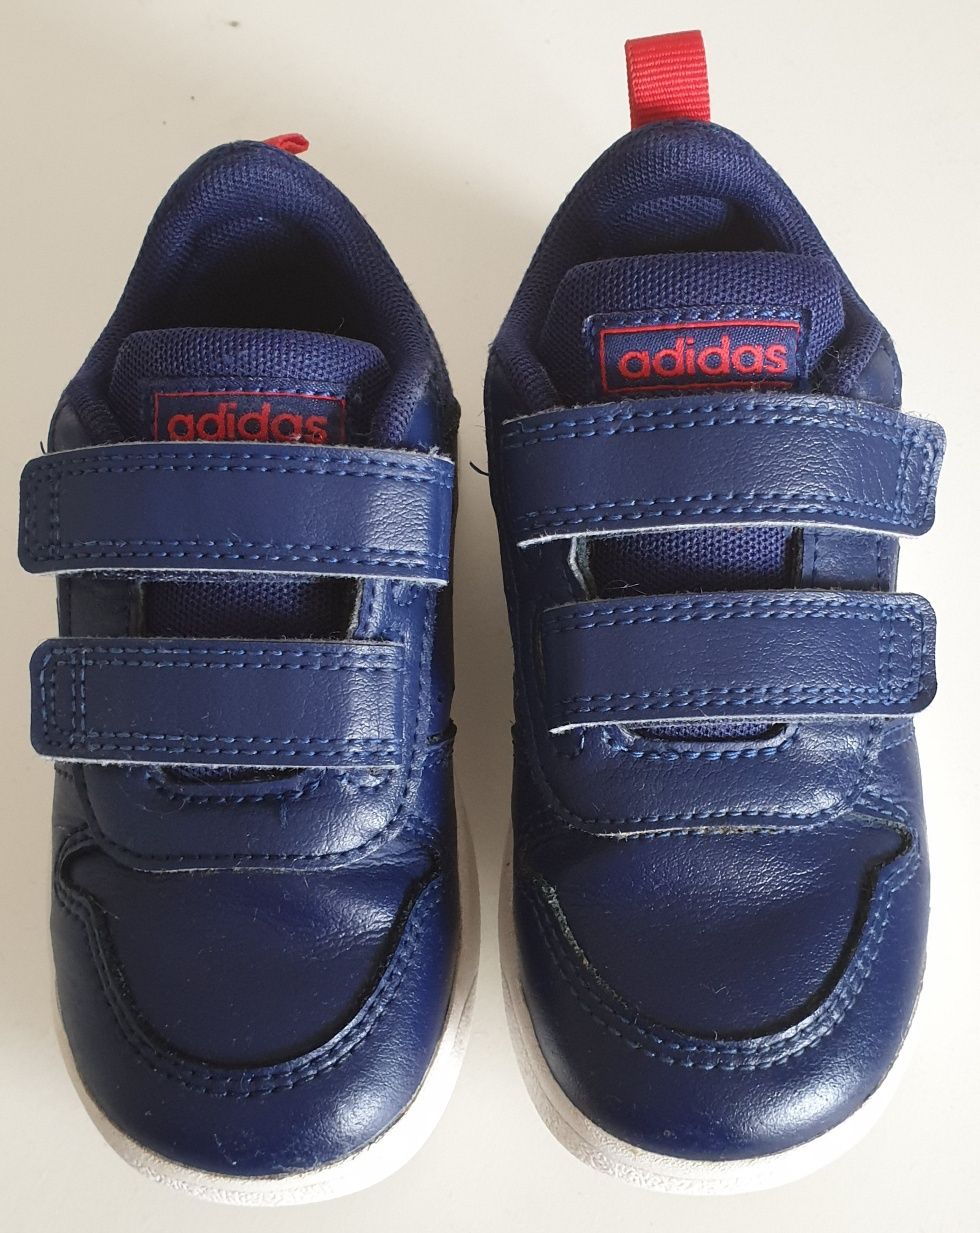 Adidas półbuty r. 24, dł. wkł. 15,5cm